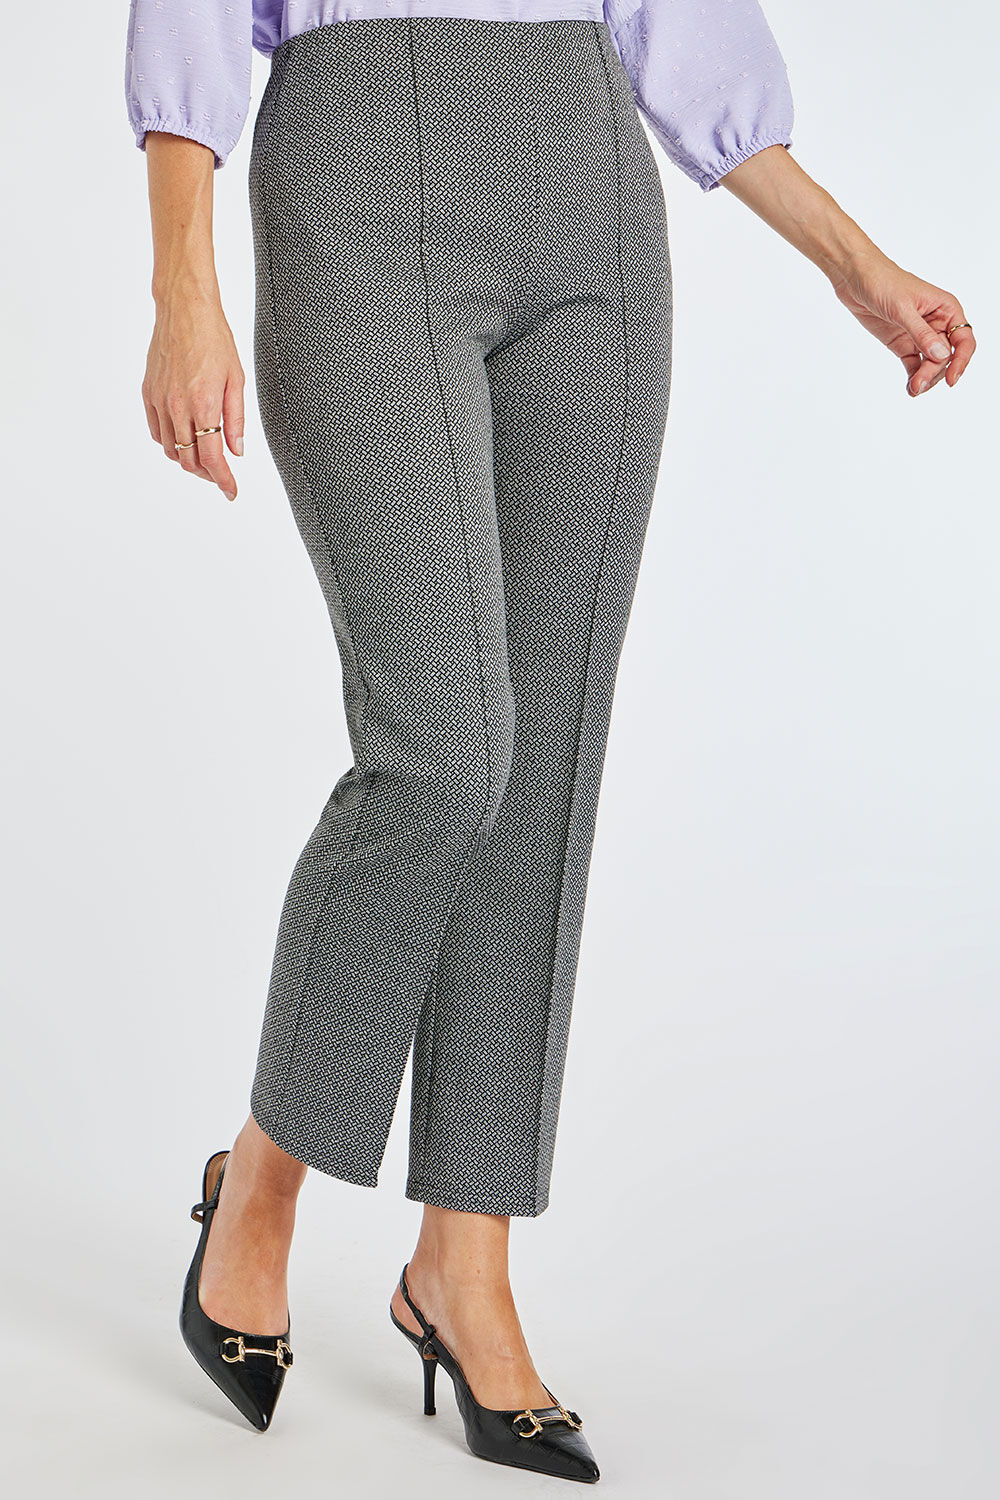 Alfani Womens Jacquard Print Casual Trouser Pants, Green, 6 - Walmart.com